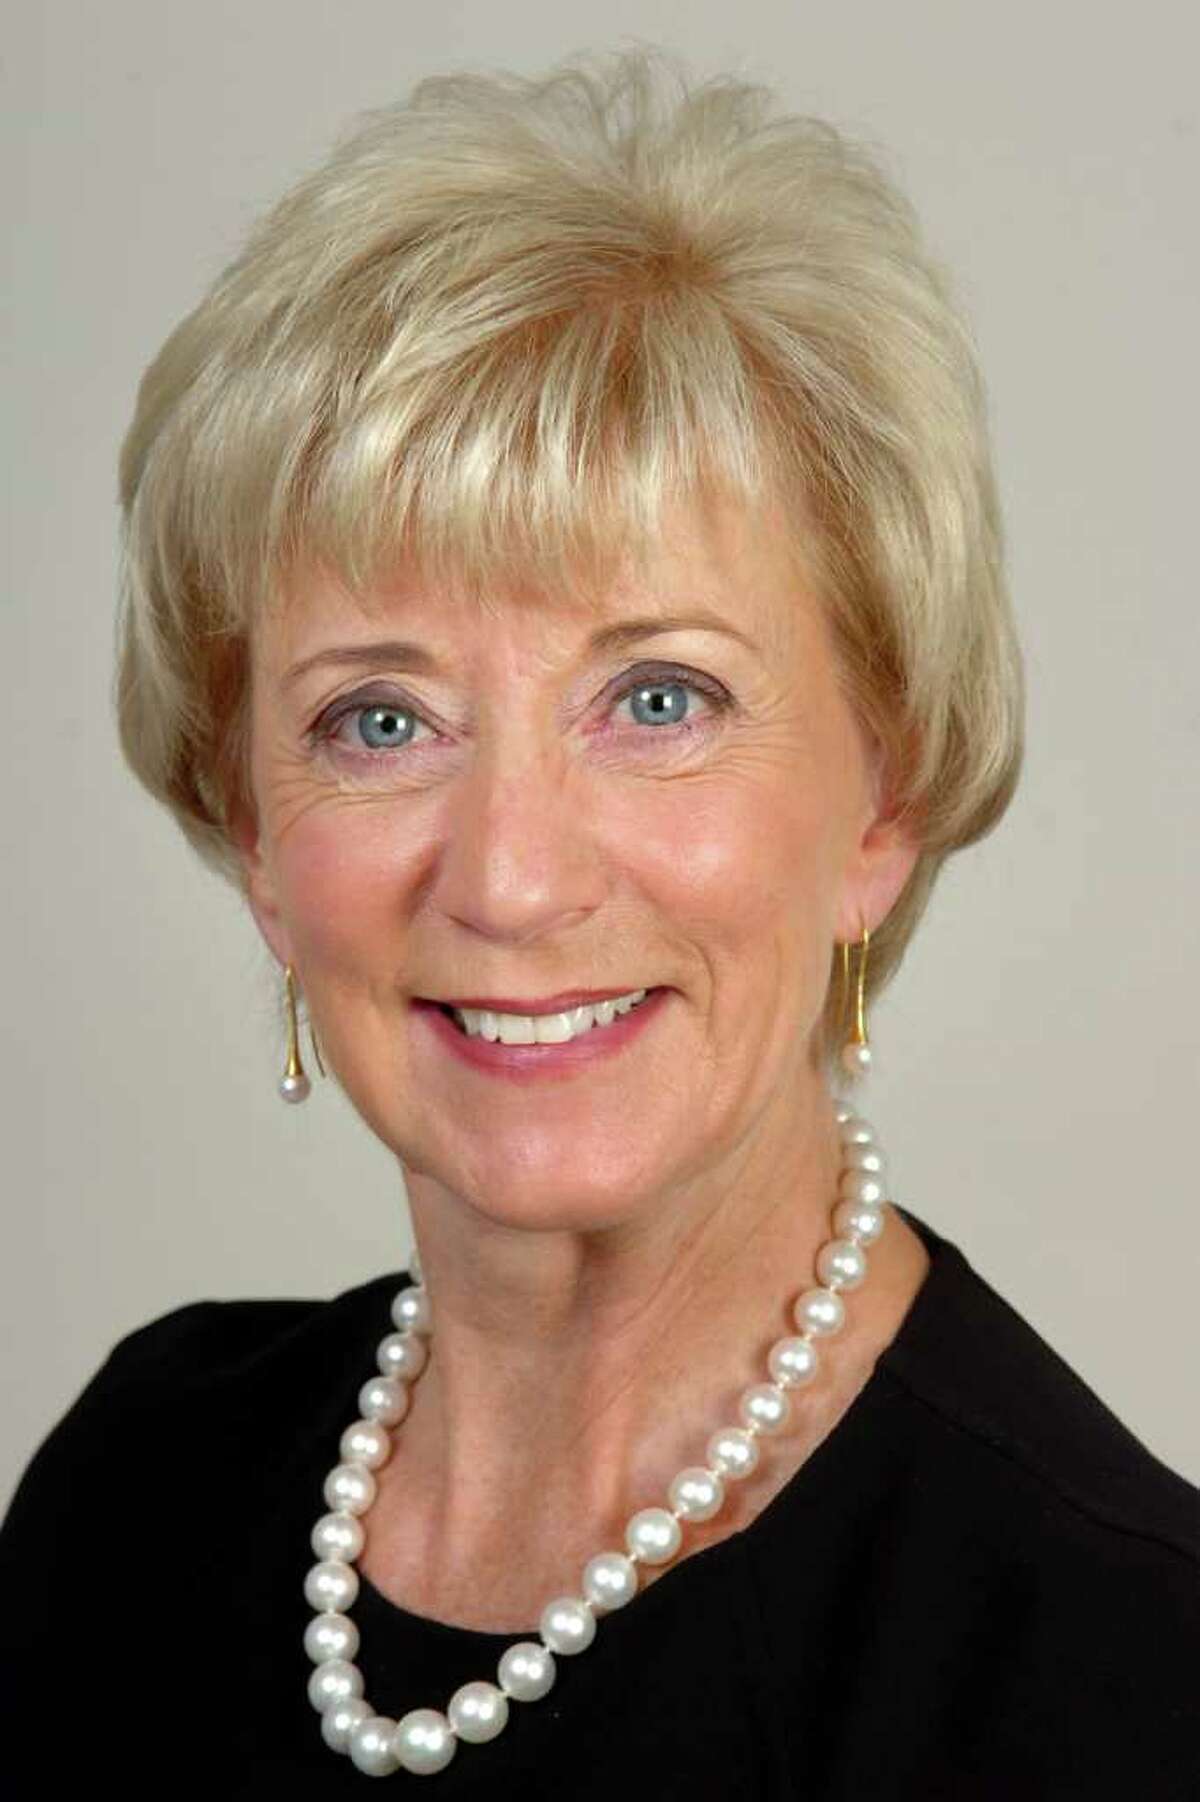 Linda McMahon, Republican candidate for U.S. Senate